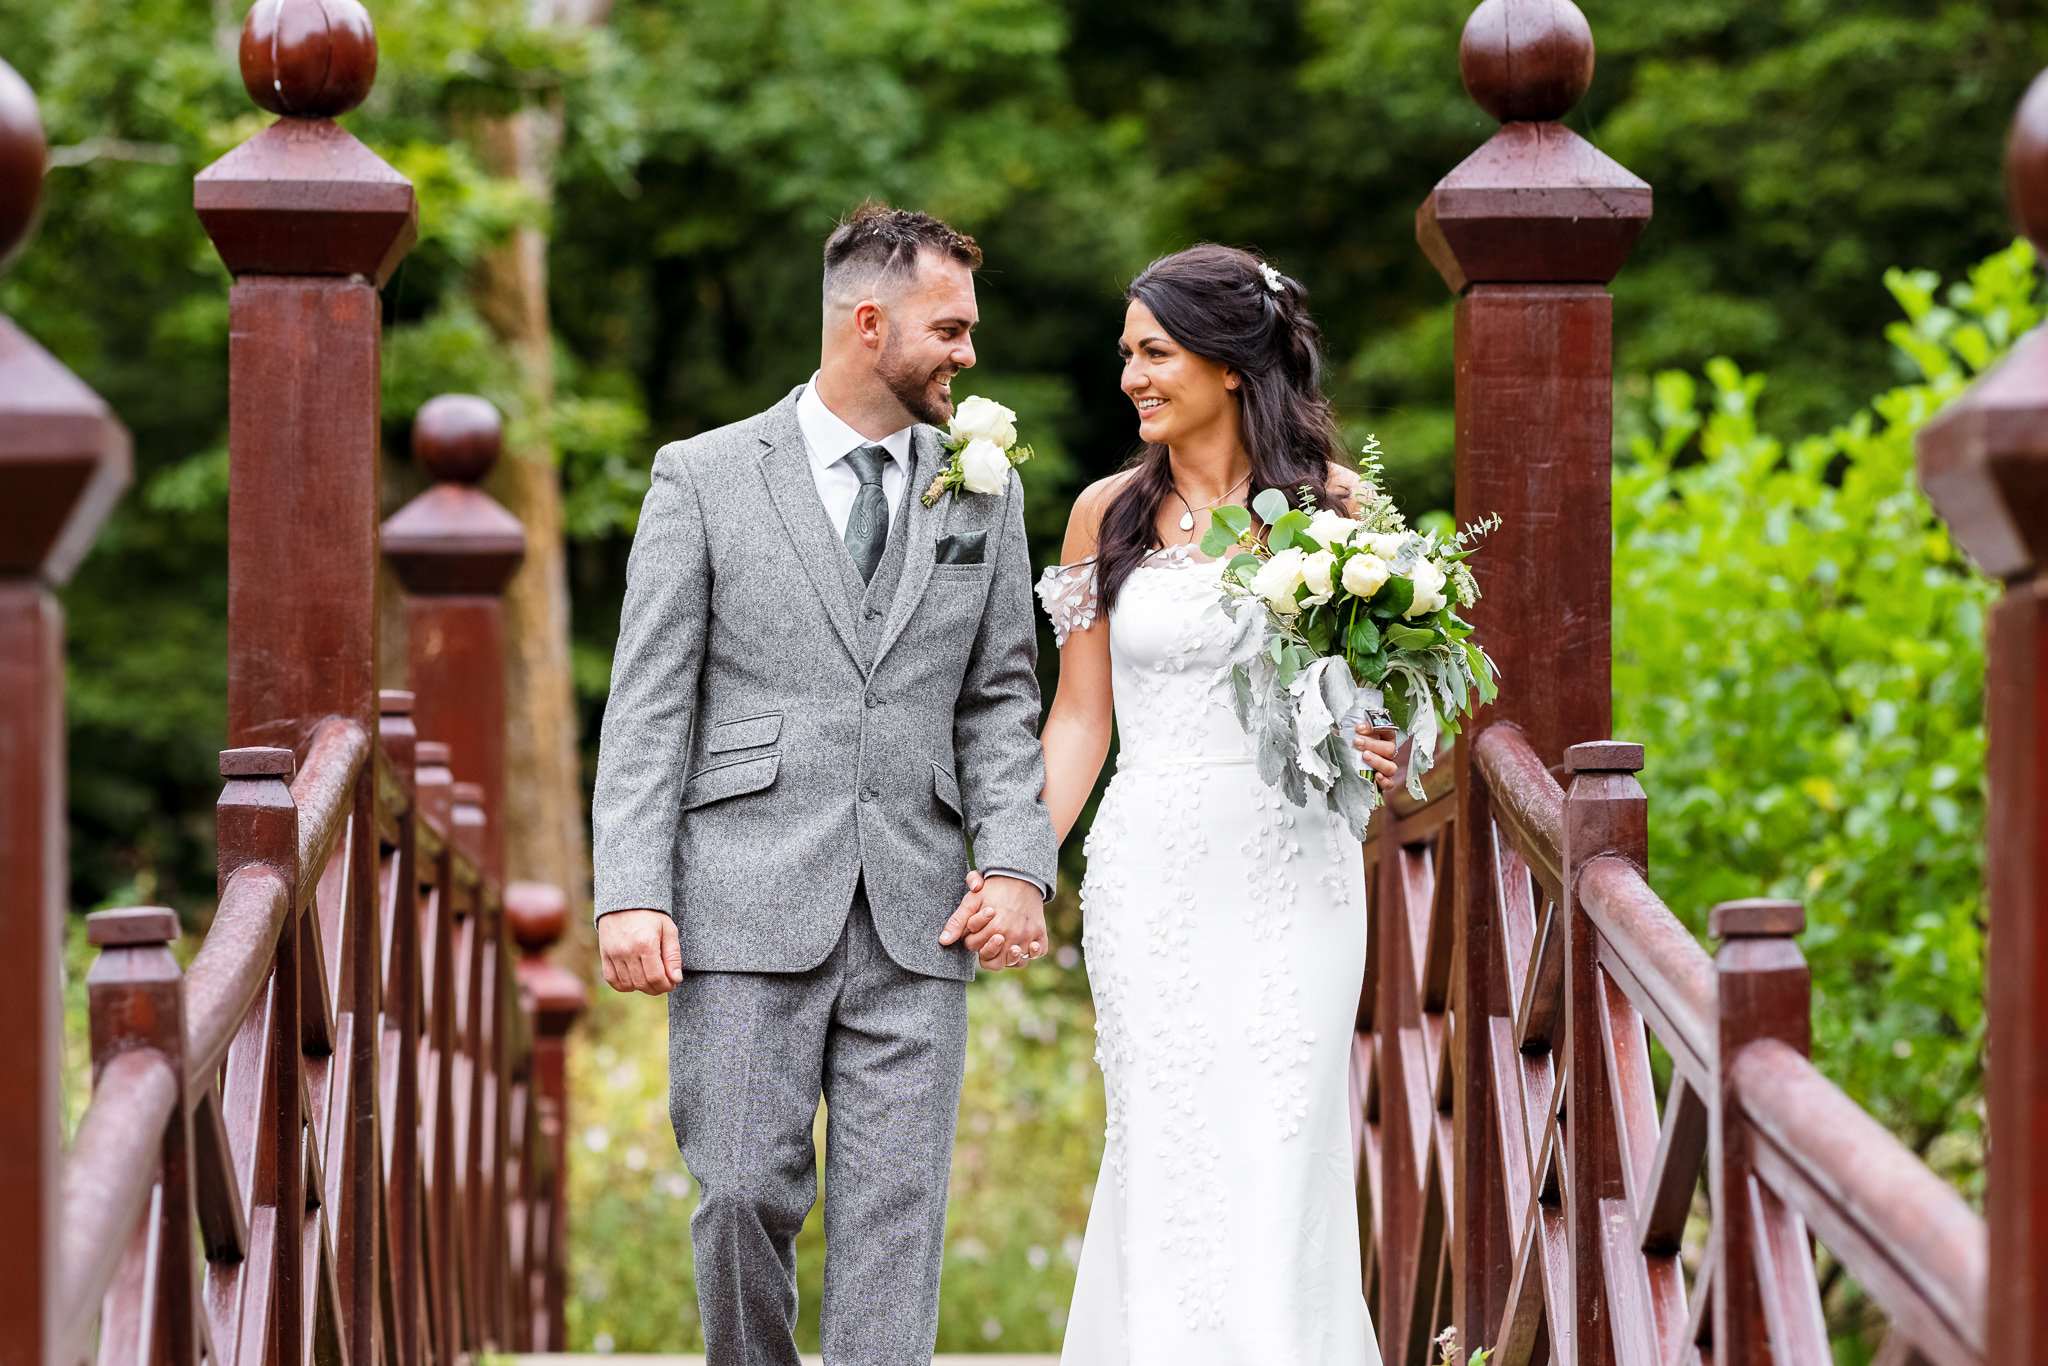 Bryngarw House wedding photography - bride and groom